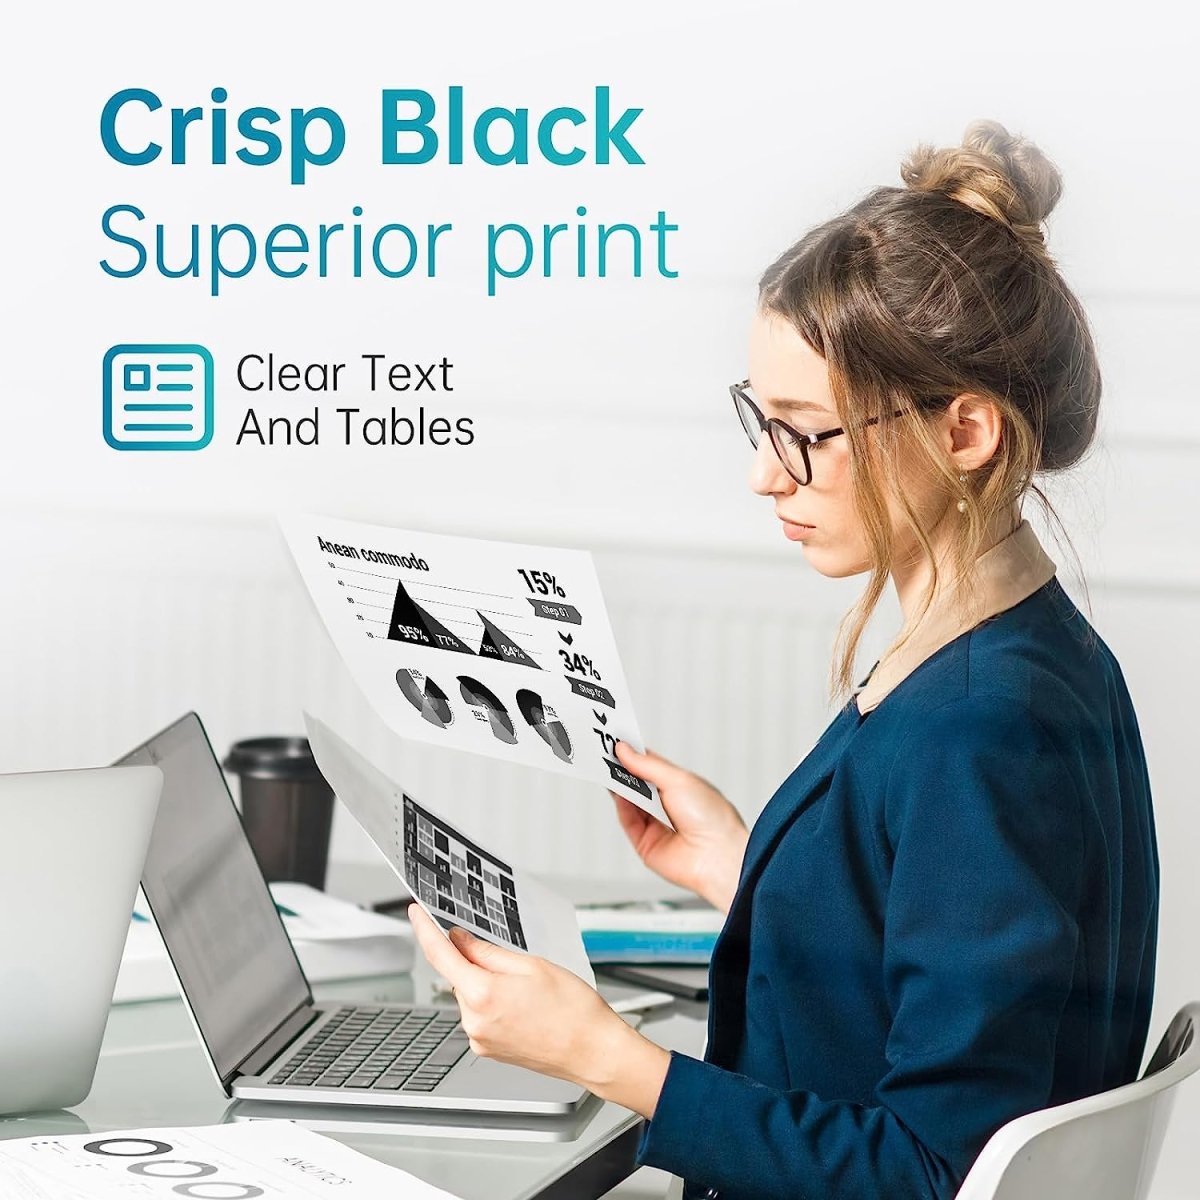 220XL Remanufactured Ink Cartridge for Epson Workforce Printer (Black Cyan Magenta Yellow, 4 Pack) - Linford Office:Printer Ink & Toner Cartridge